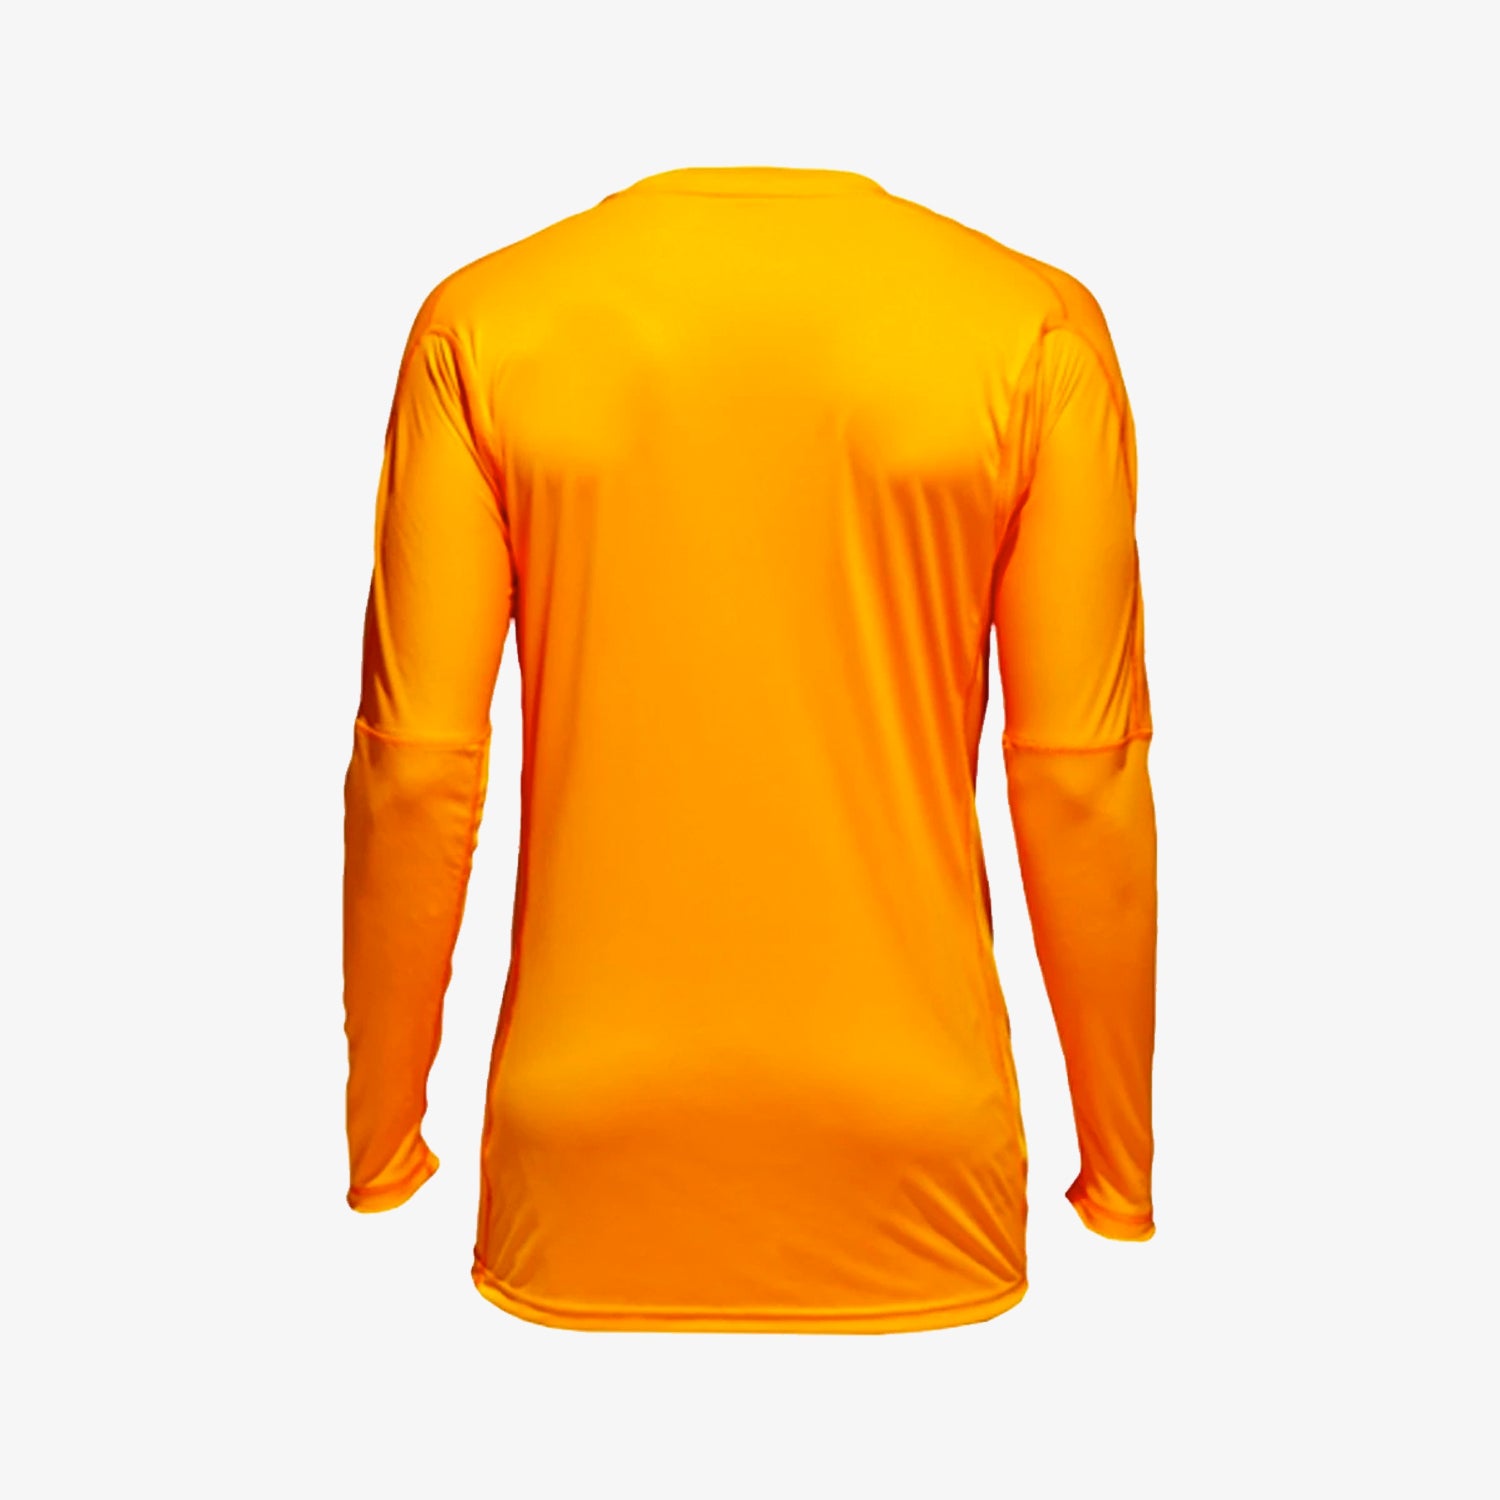 adipro 18 goalkeeper jersey